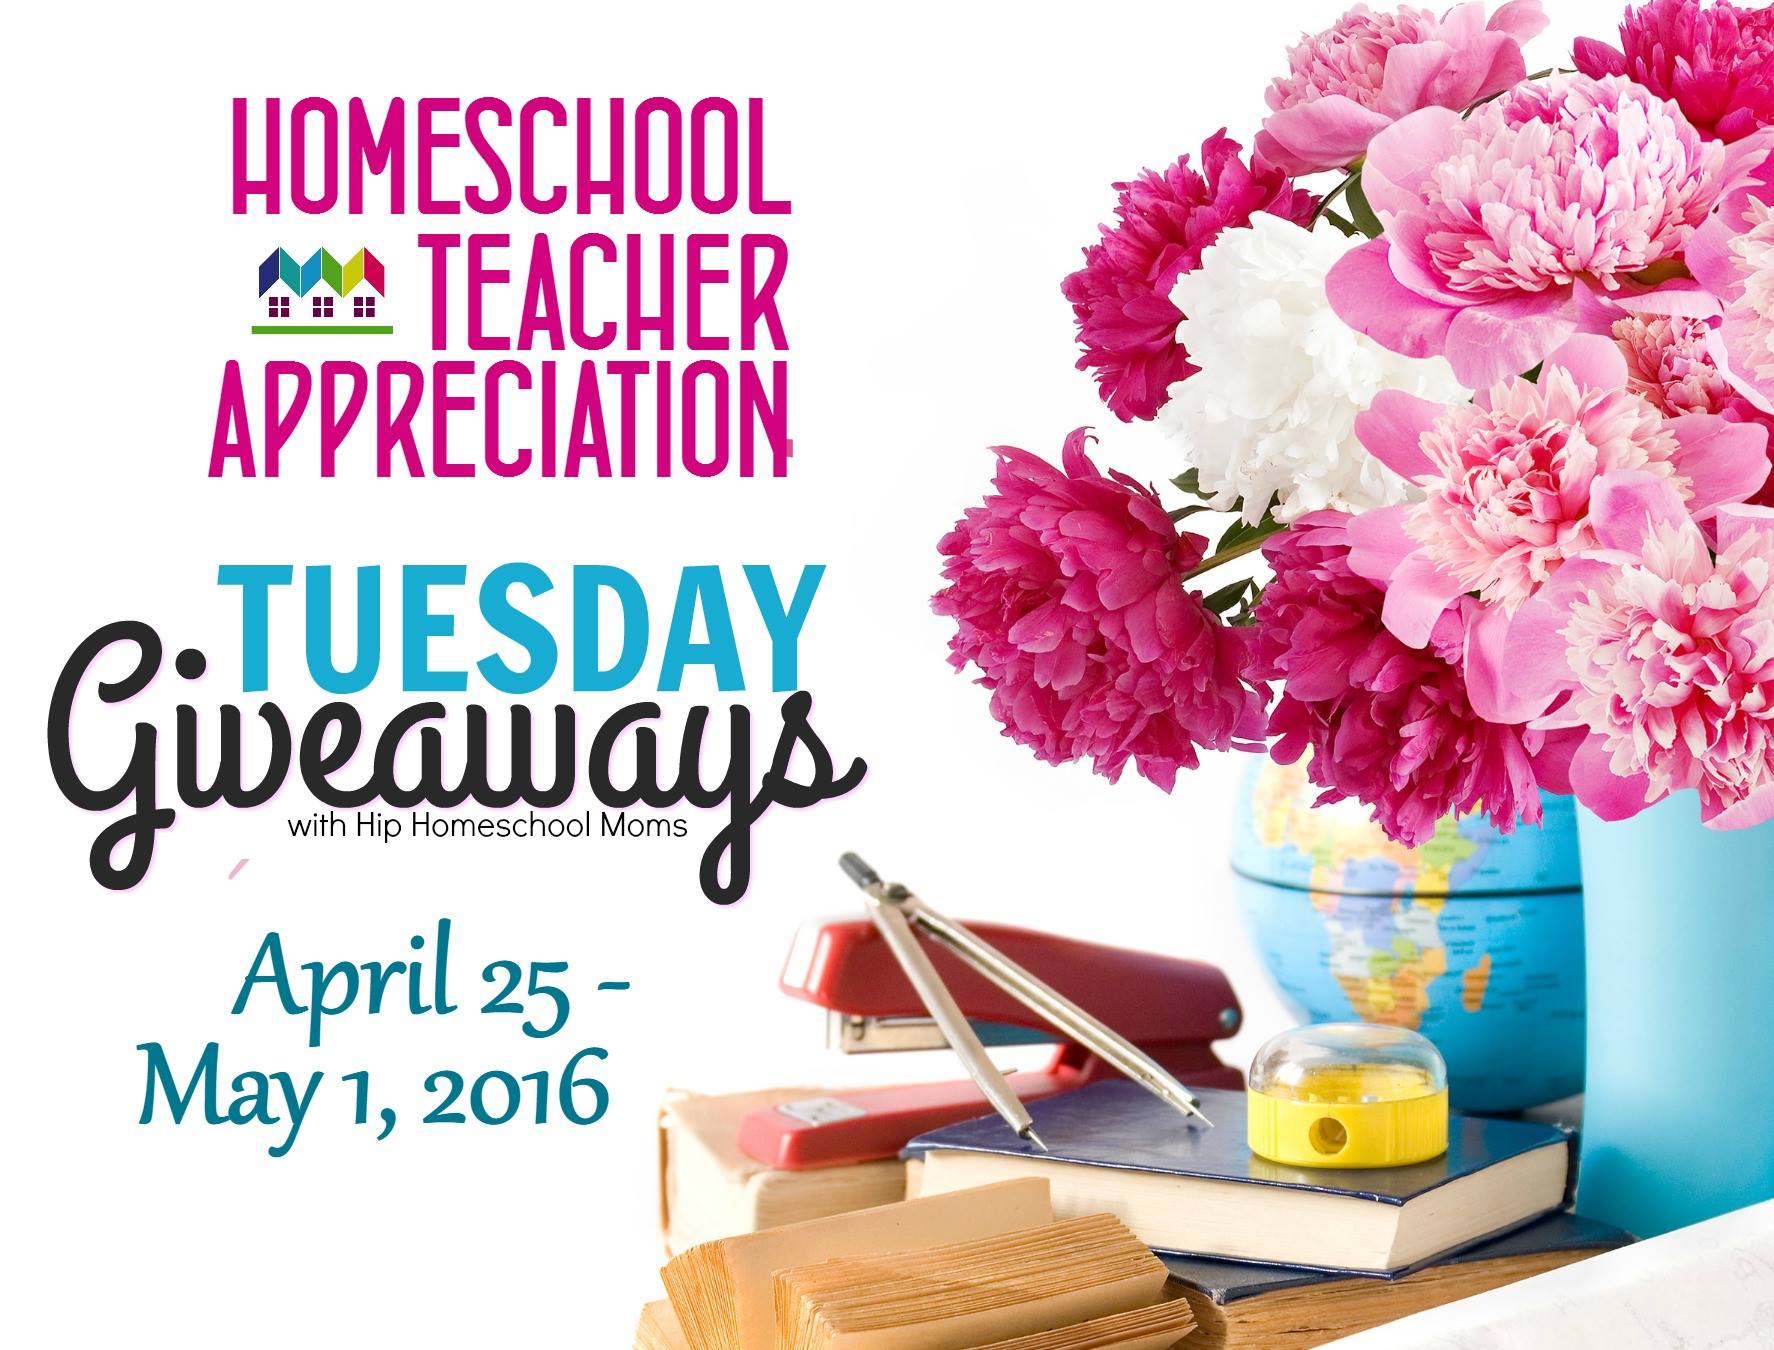 Tuesday’s Giveaways for Homeschool Teacher Appreciation Week